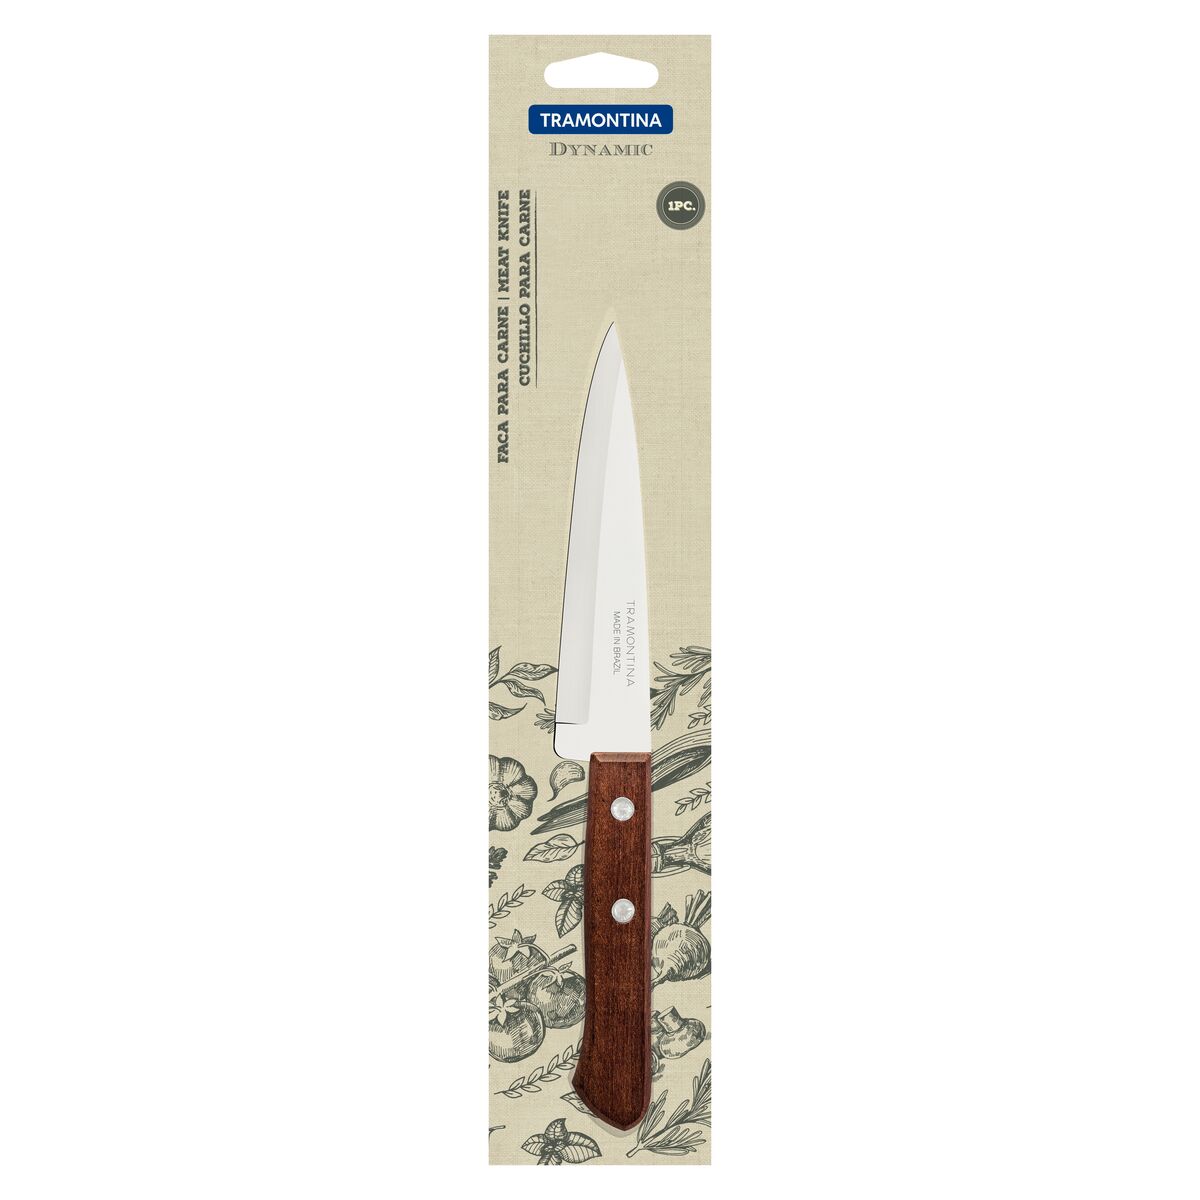 Tramontina Cooks Knife 5" Dynamic - 22902/105